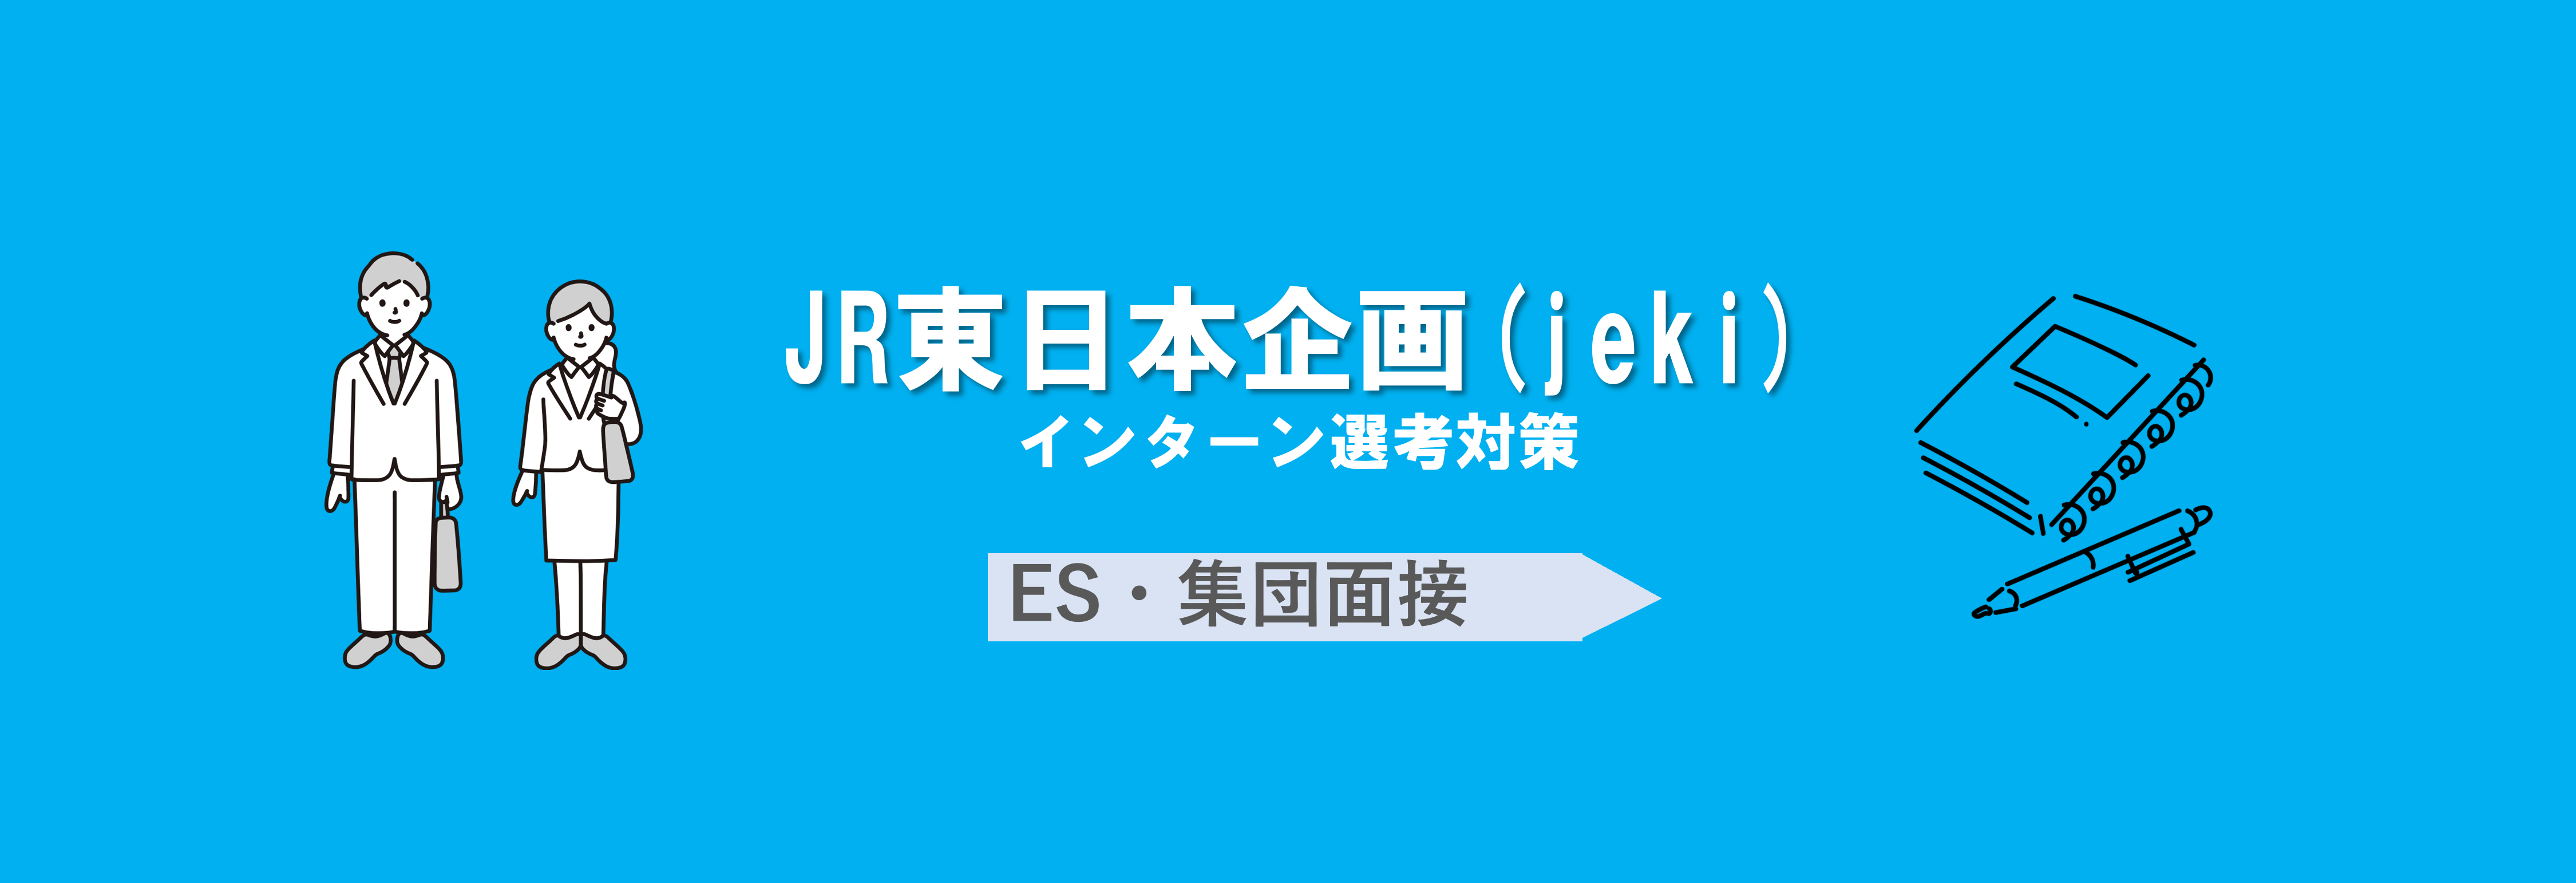 JR東日本企画(jeki)のインターン選考(ES・集団面接)対策